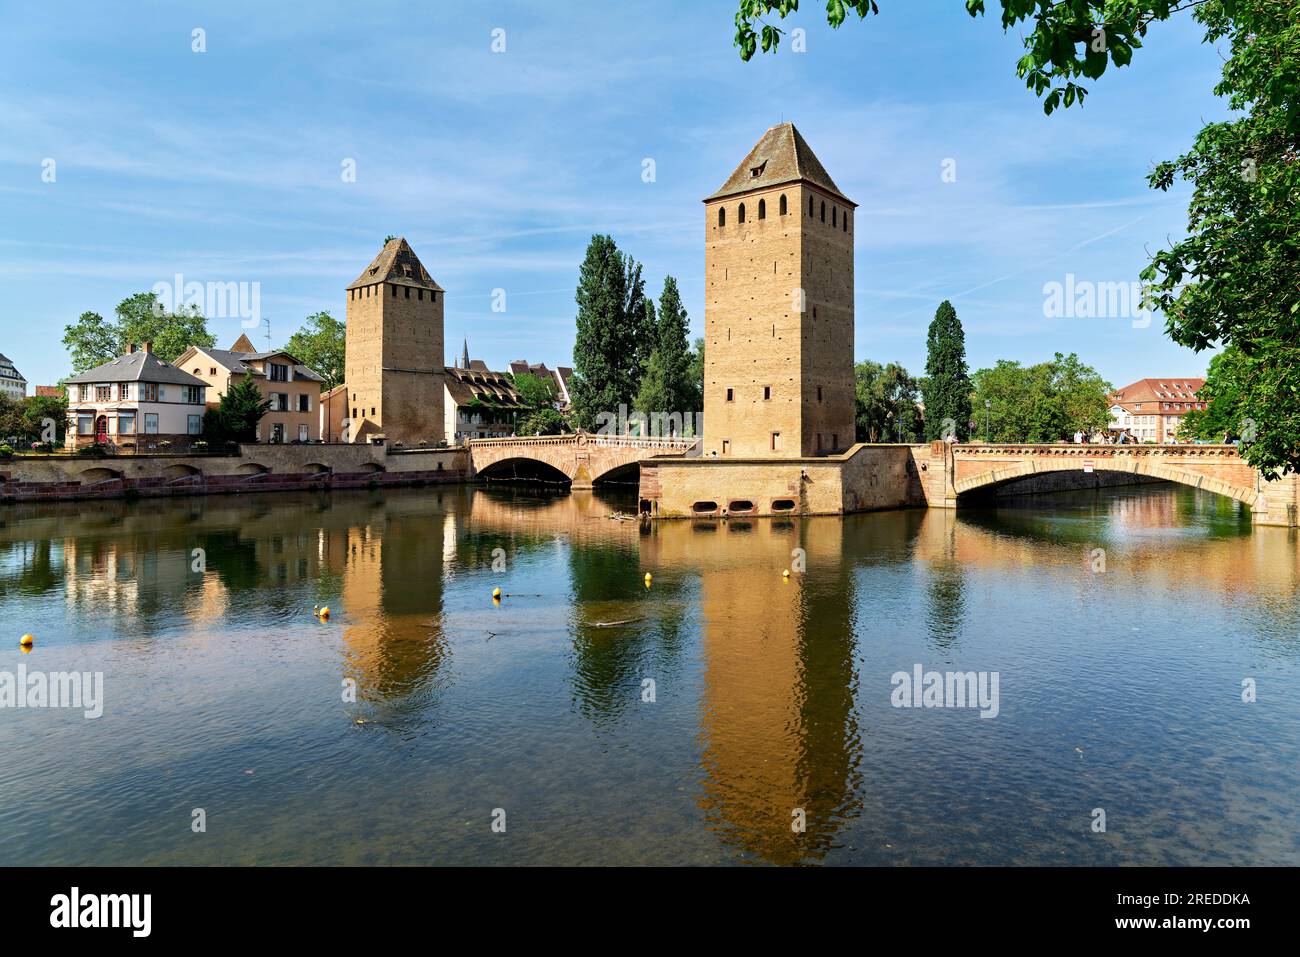 Strasbourg Alsace France. Les ponts couverts Banque D'Images